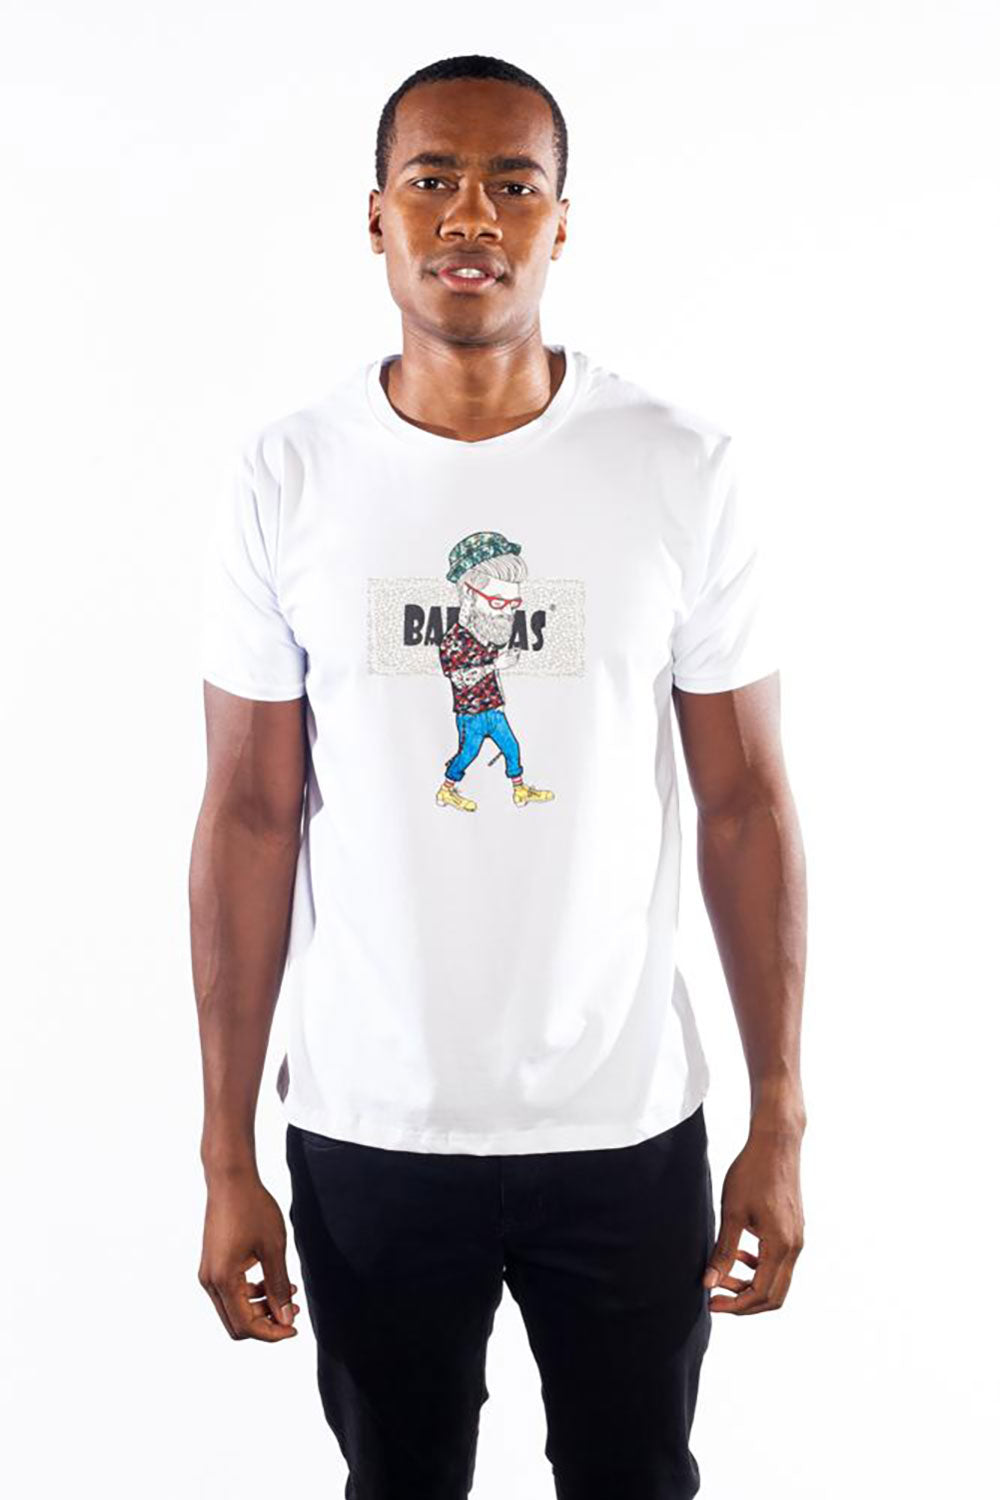 BARABAS Men's Cartoon Character Printed Crew Neck White T-shirt TB003